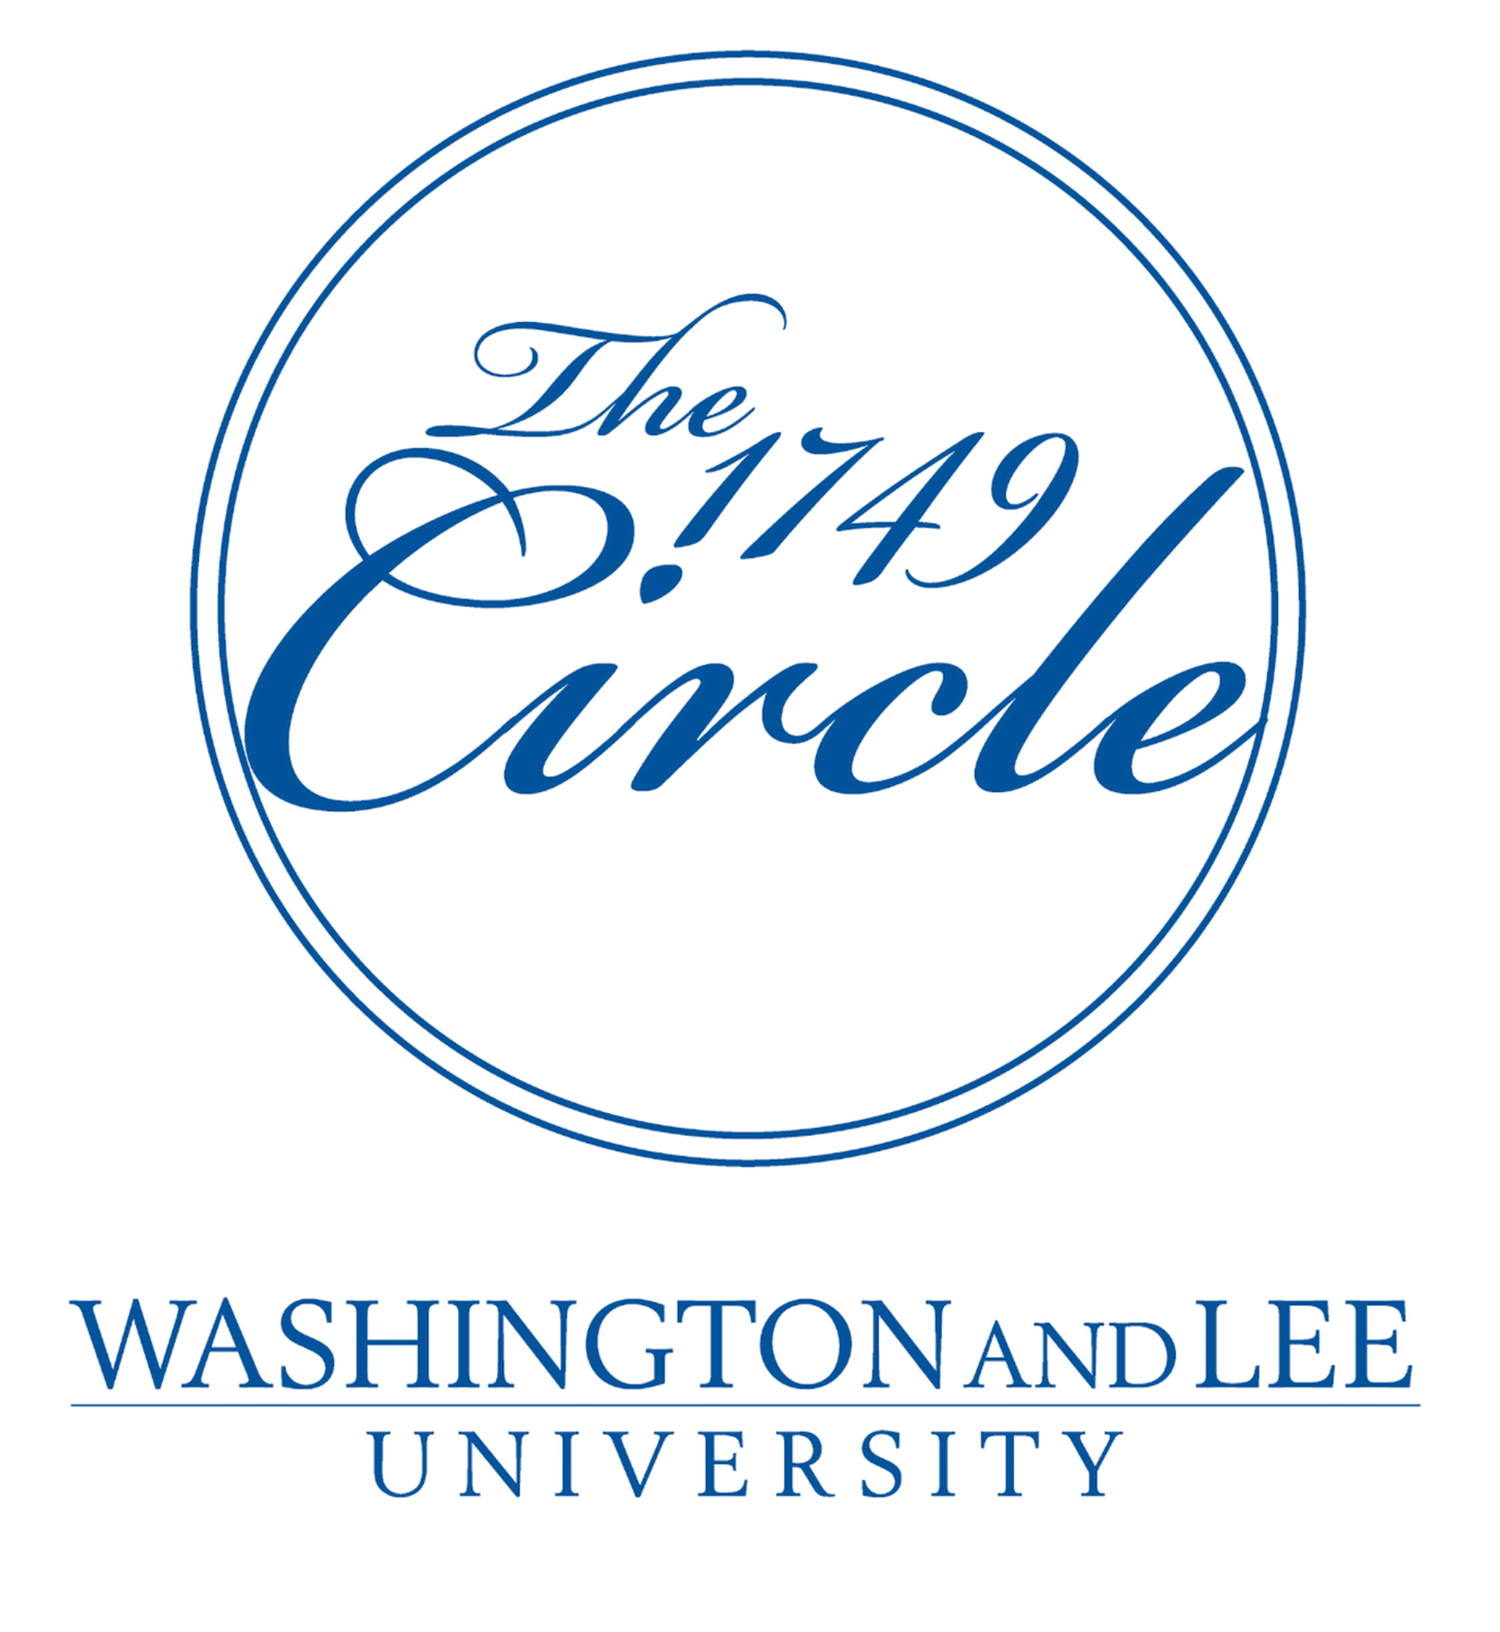 The 1749 Circle logo